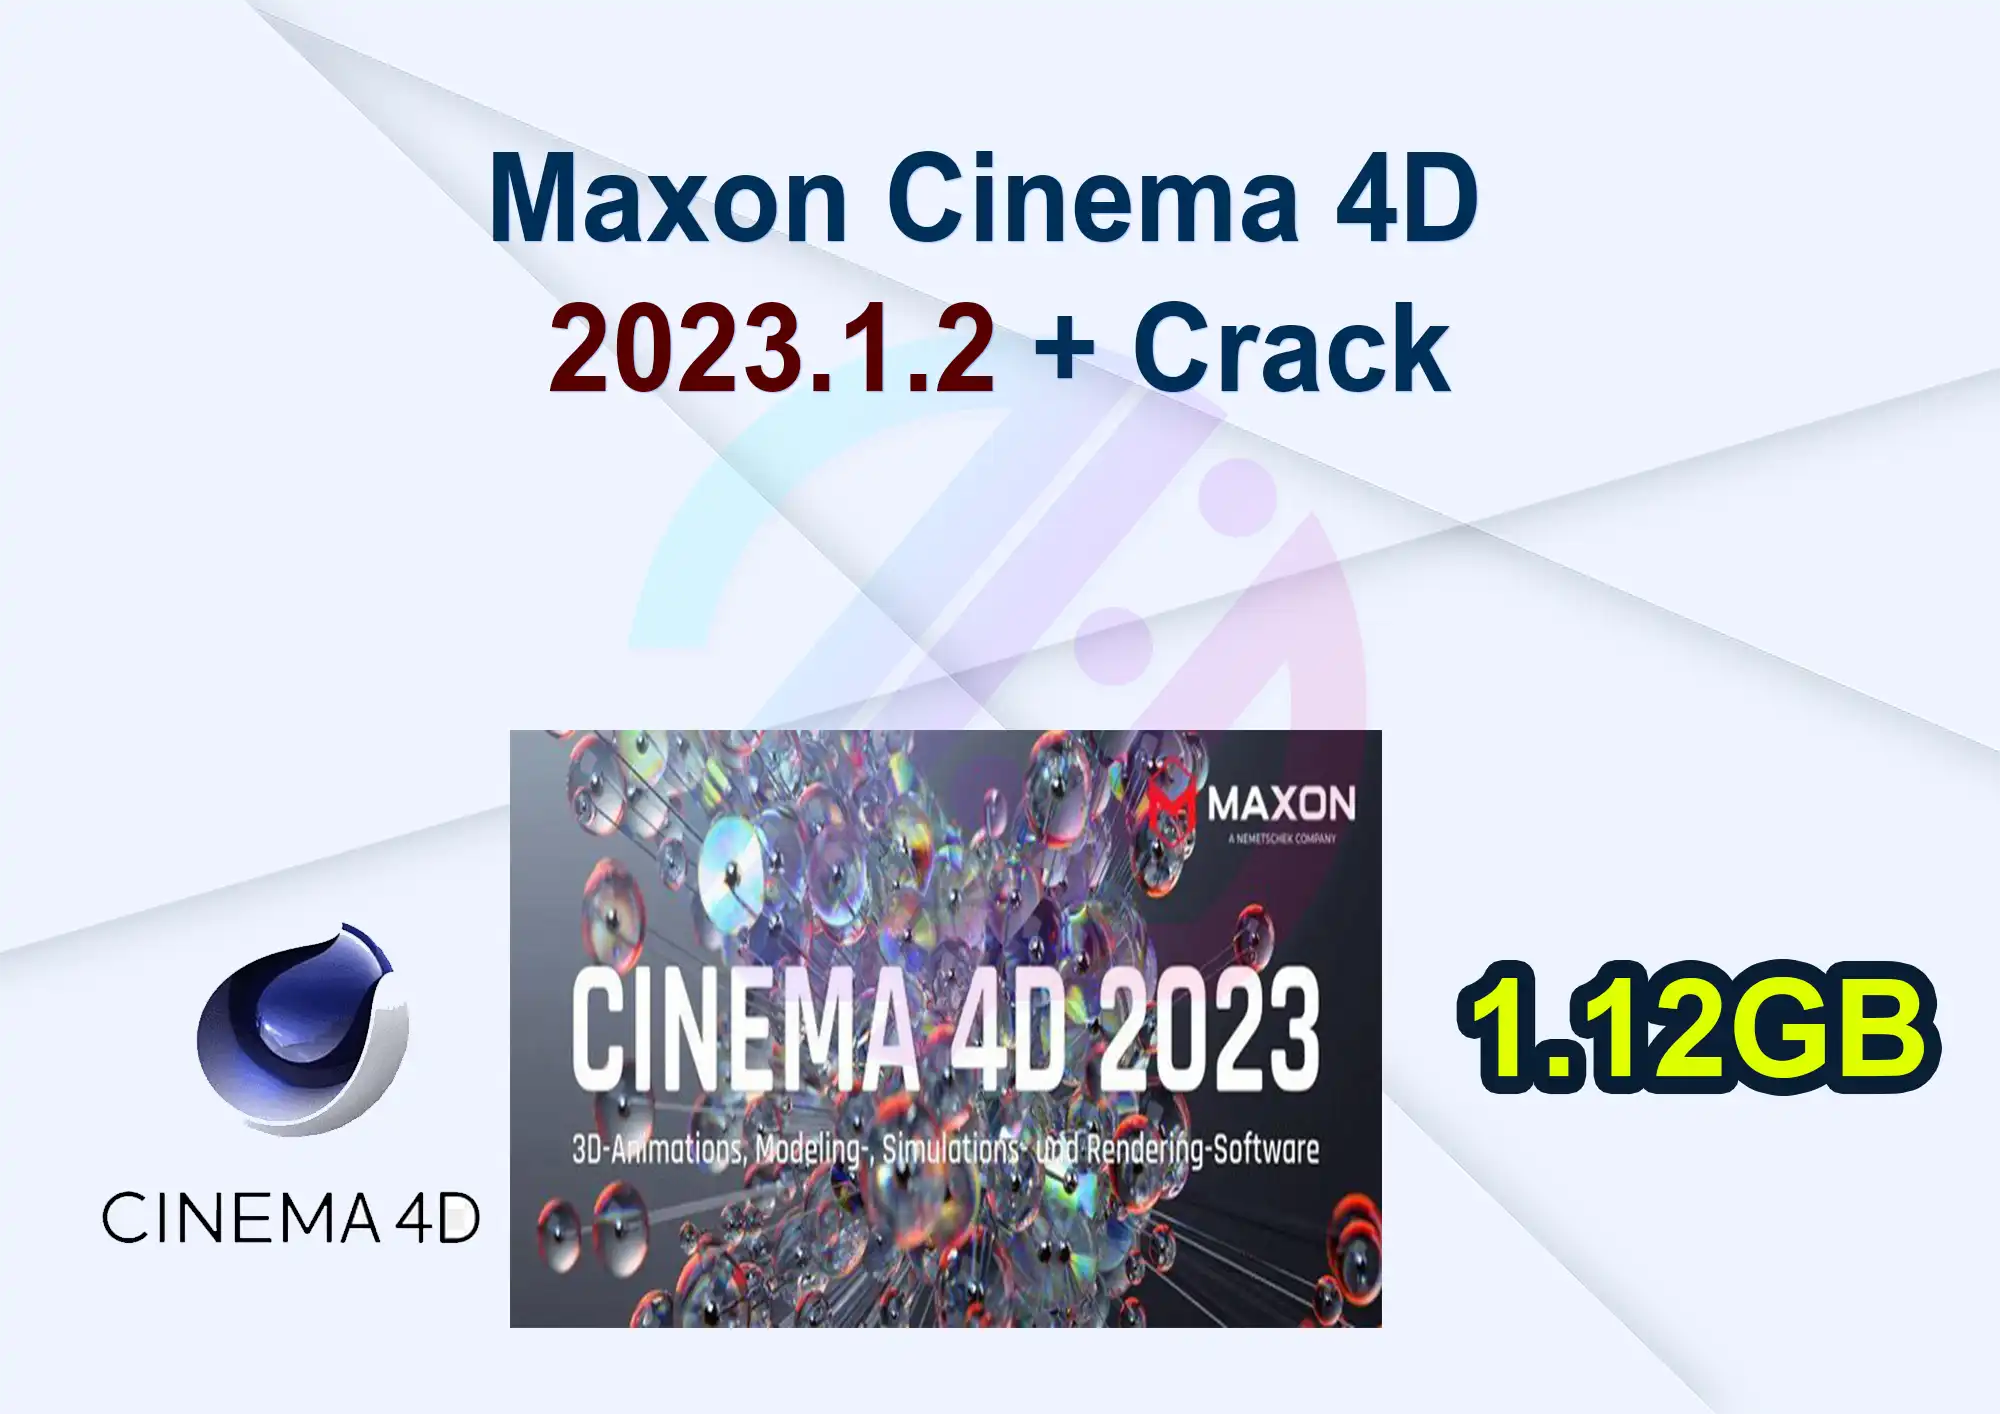 Maxon Cinema 4D 2023.1.2 + Crack